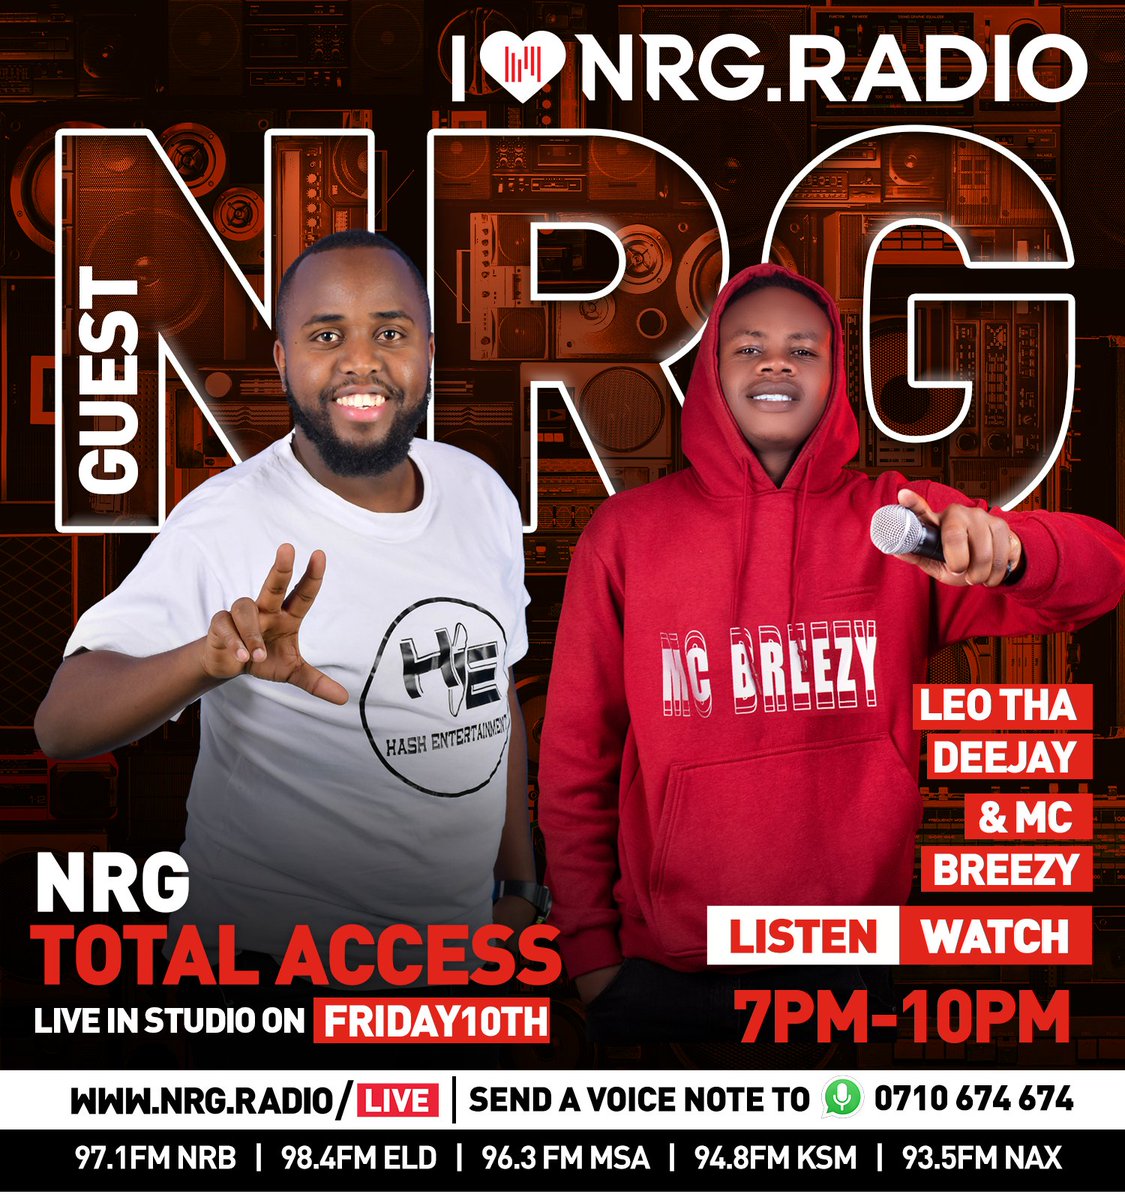 TONIGHT ON YOUR STEREO. TUNE IN TO @nrgradiokenya NRG TOTAL ACCESS, FROM 7PM TO 10PM ALONGSIDE @breezykenya 🔥🔥🔥🔥

Nairobi 97.1FM
Nakuru 93.5FM
Eldoret 98.4FM
Kisumu 94.8FM
Mombasa 96.3FM

#NRGTOTALACCESS #sayless #payless